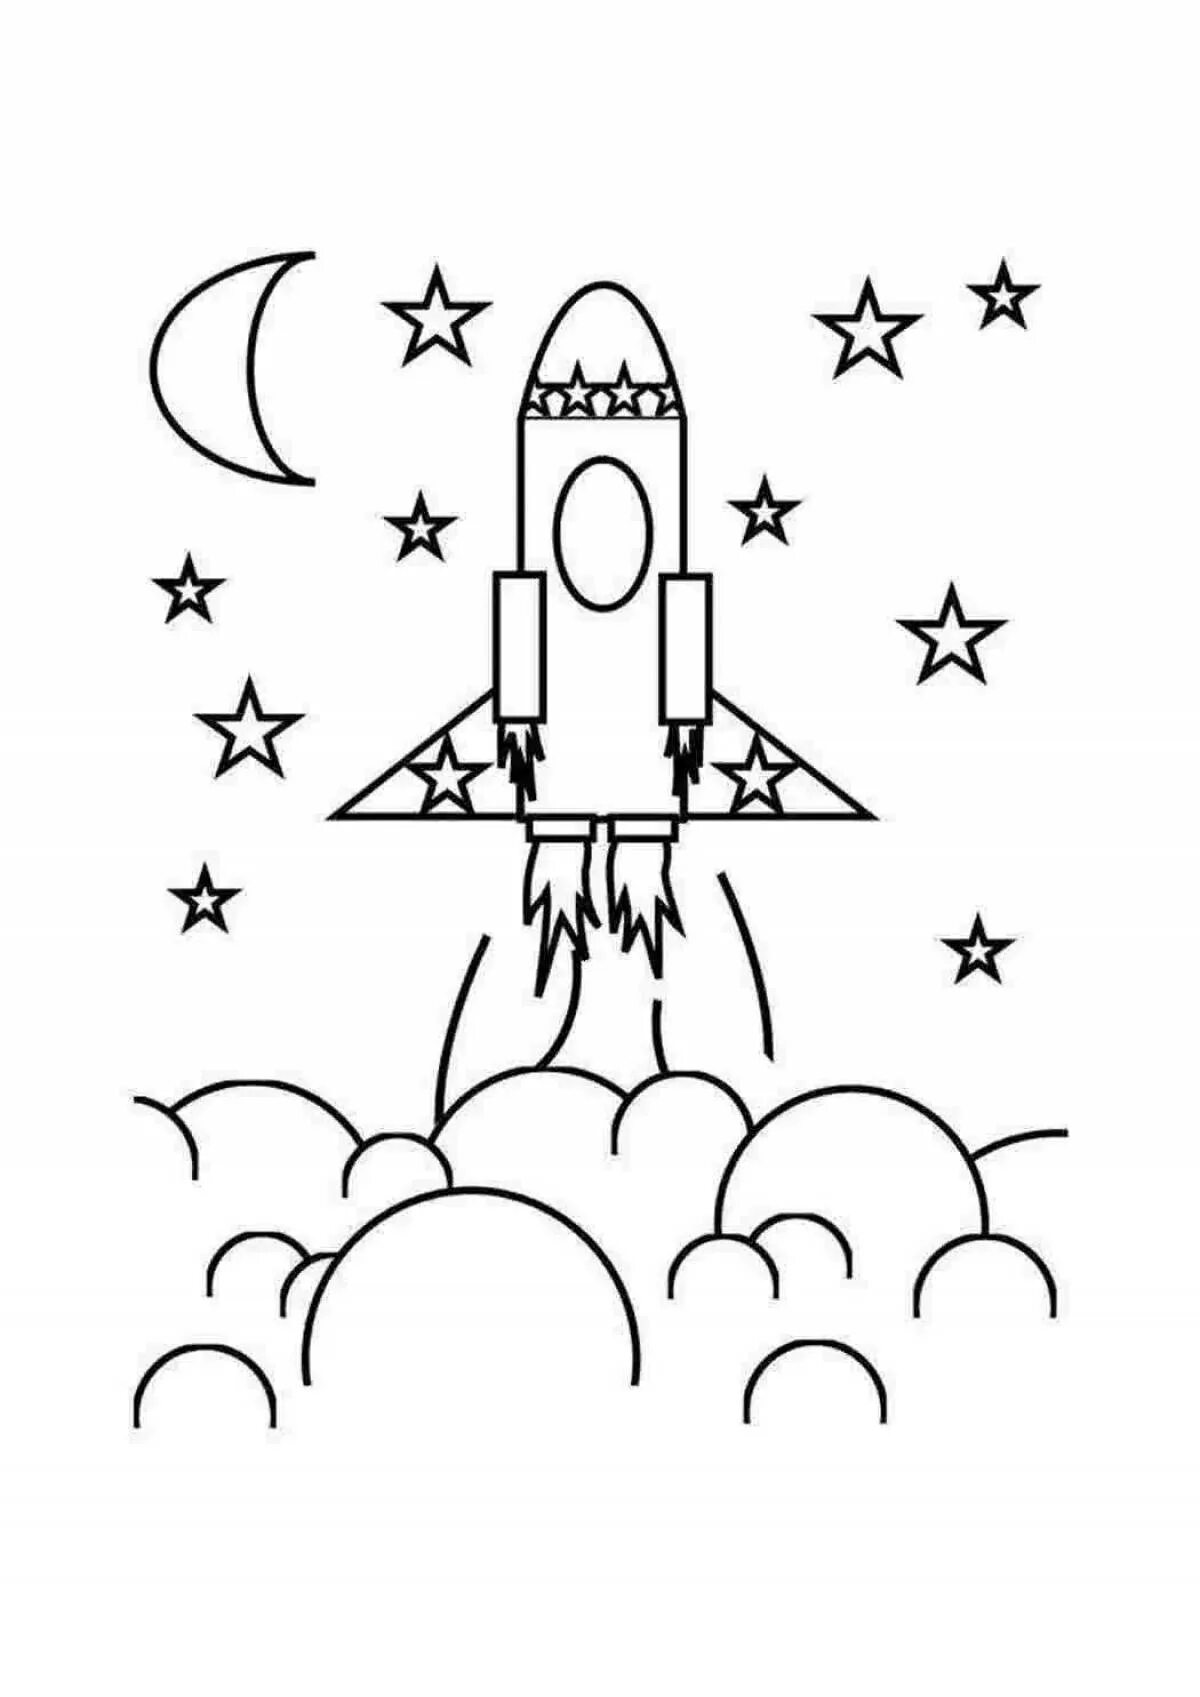 Ракета раскраска для детей 5 лет. Раскраска для малышей. Космос. Космос раскраска для детей. Ракета раскраска для детей. Космическая ракета раскраска.